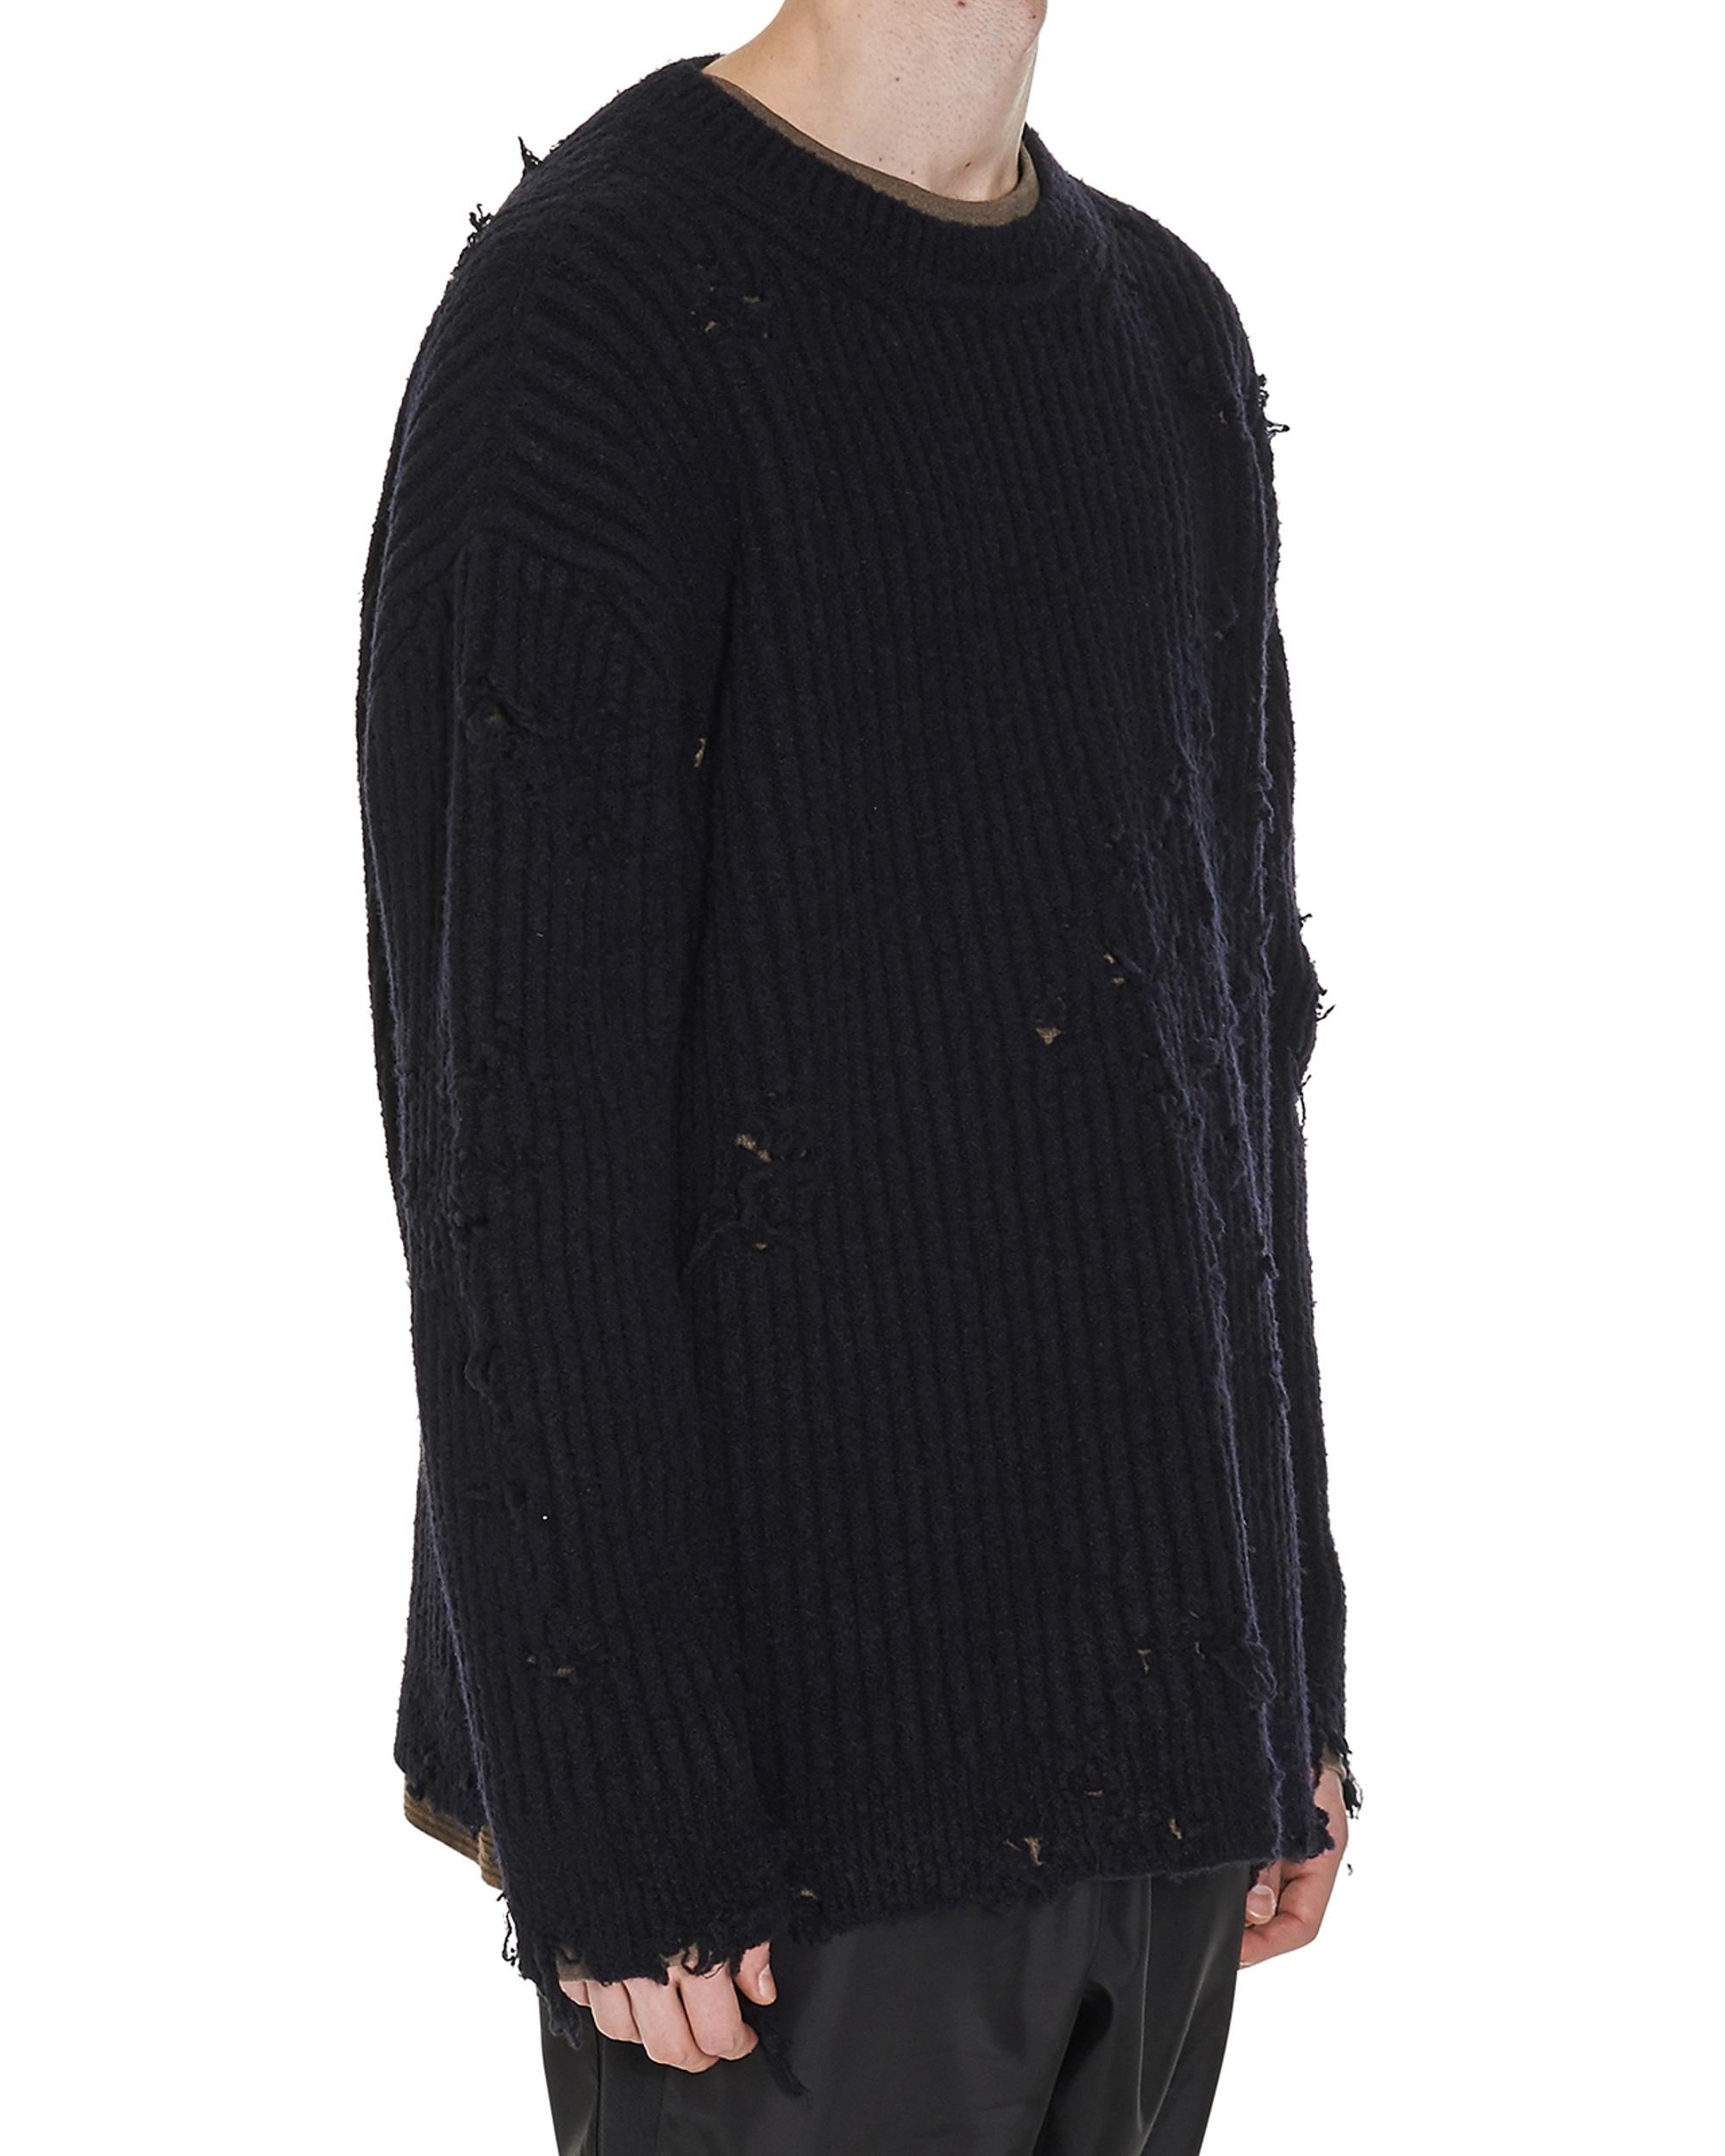 Yeezy Destroyed Oversized Boucle Sweatshirt in Onyx (Black) for Men - Lyst